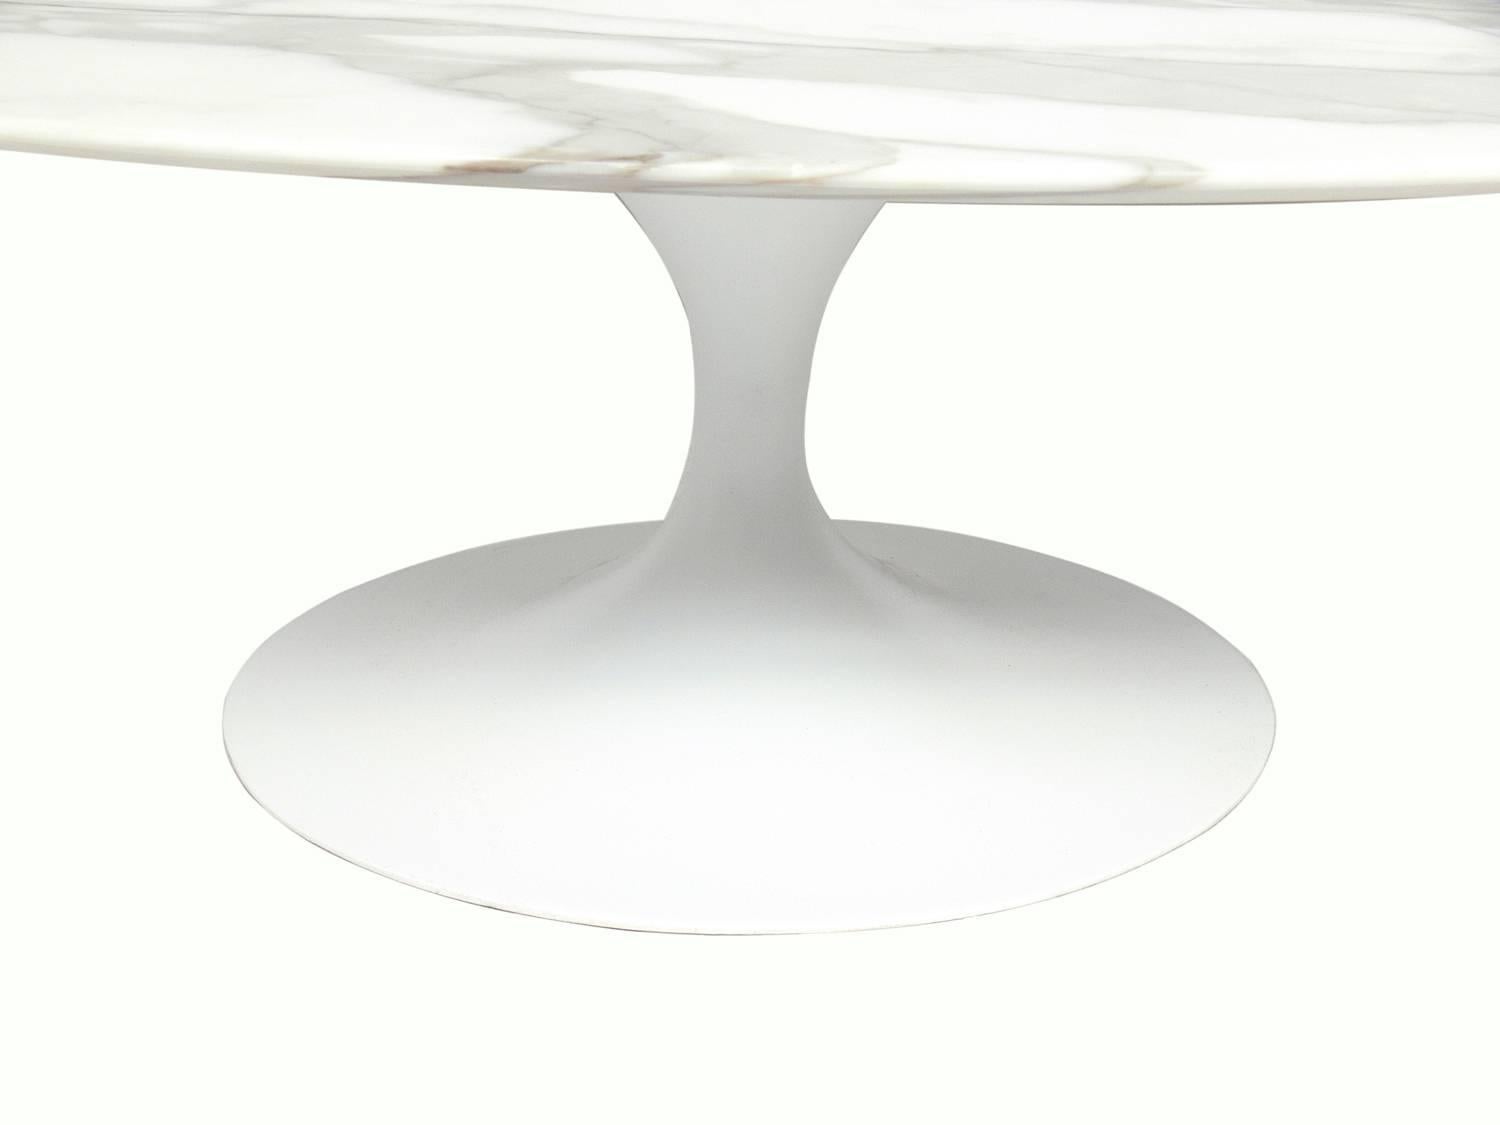 American Oval Marble-Top Tulip Coffee Table by Eero Saarinen for Knoll